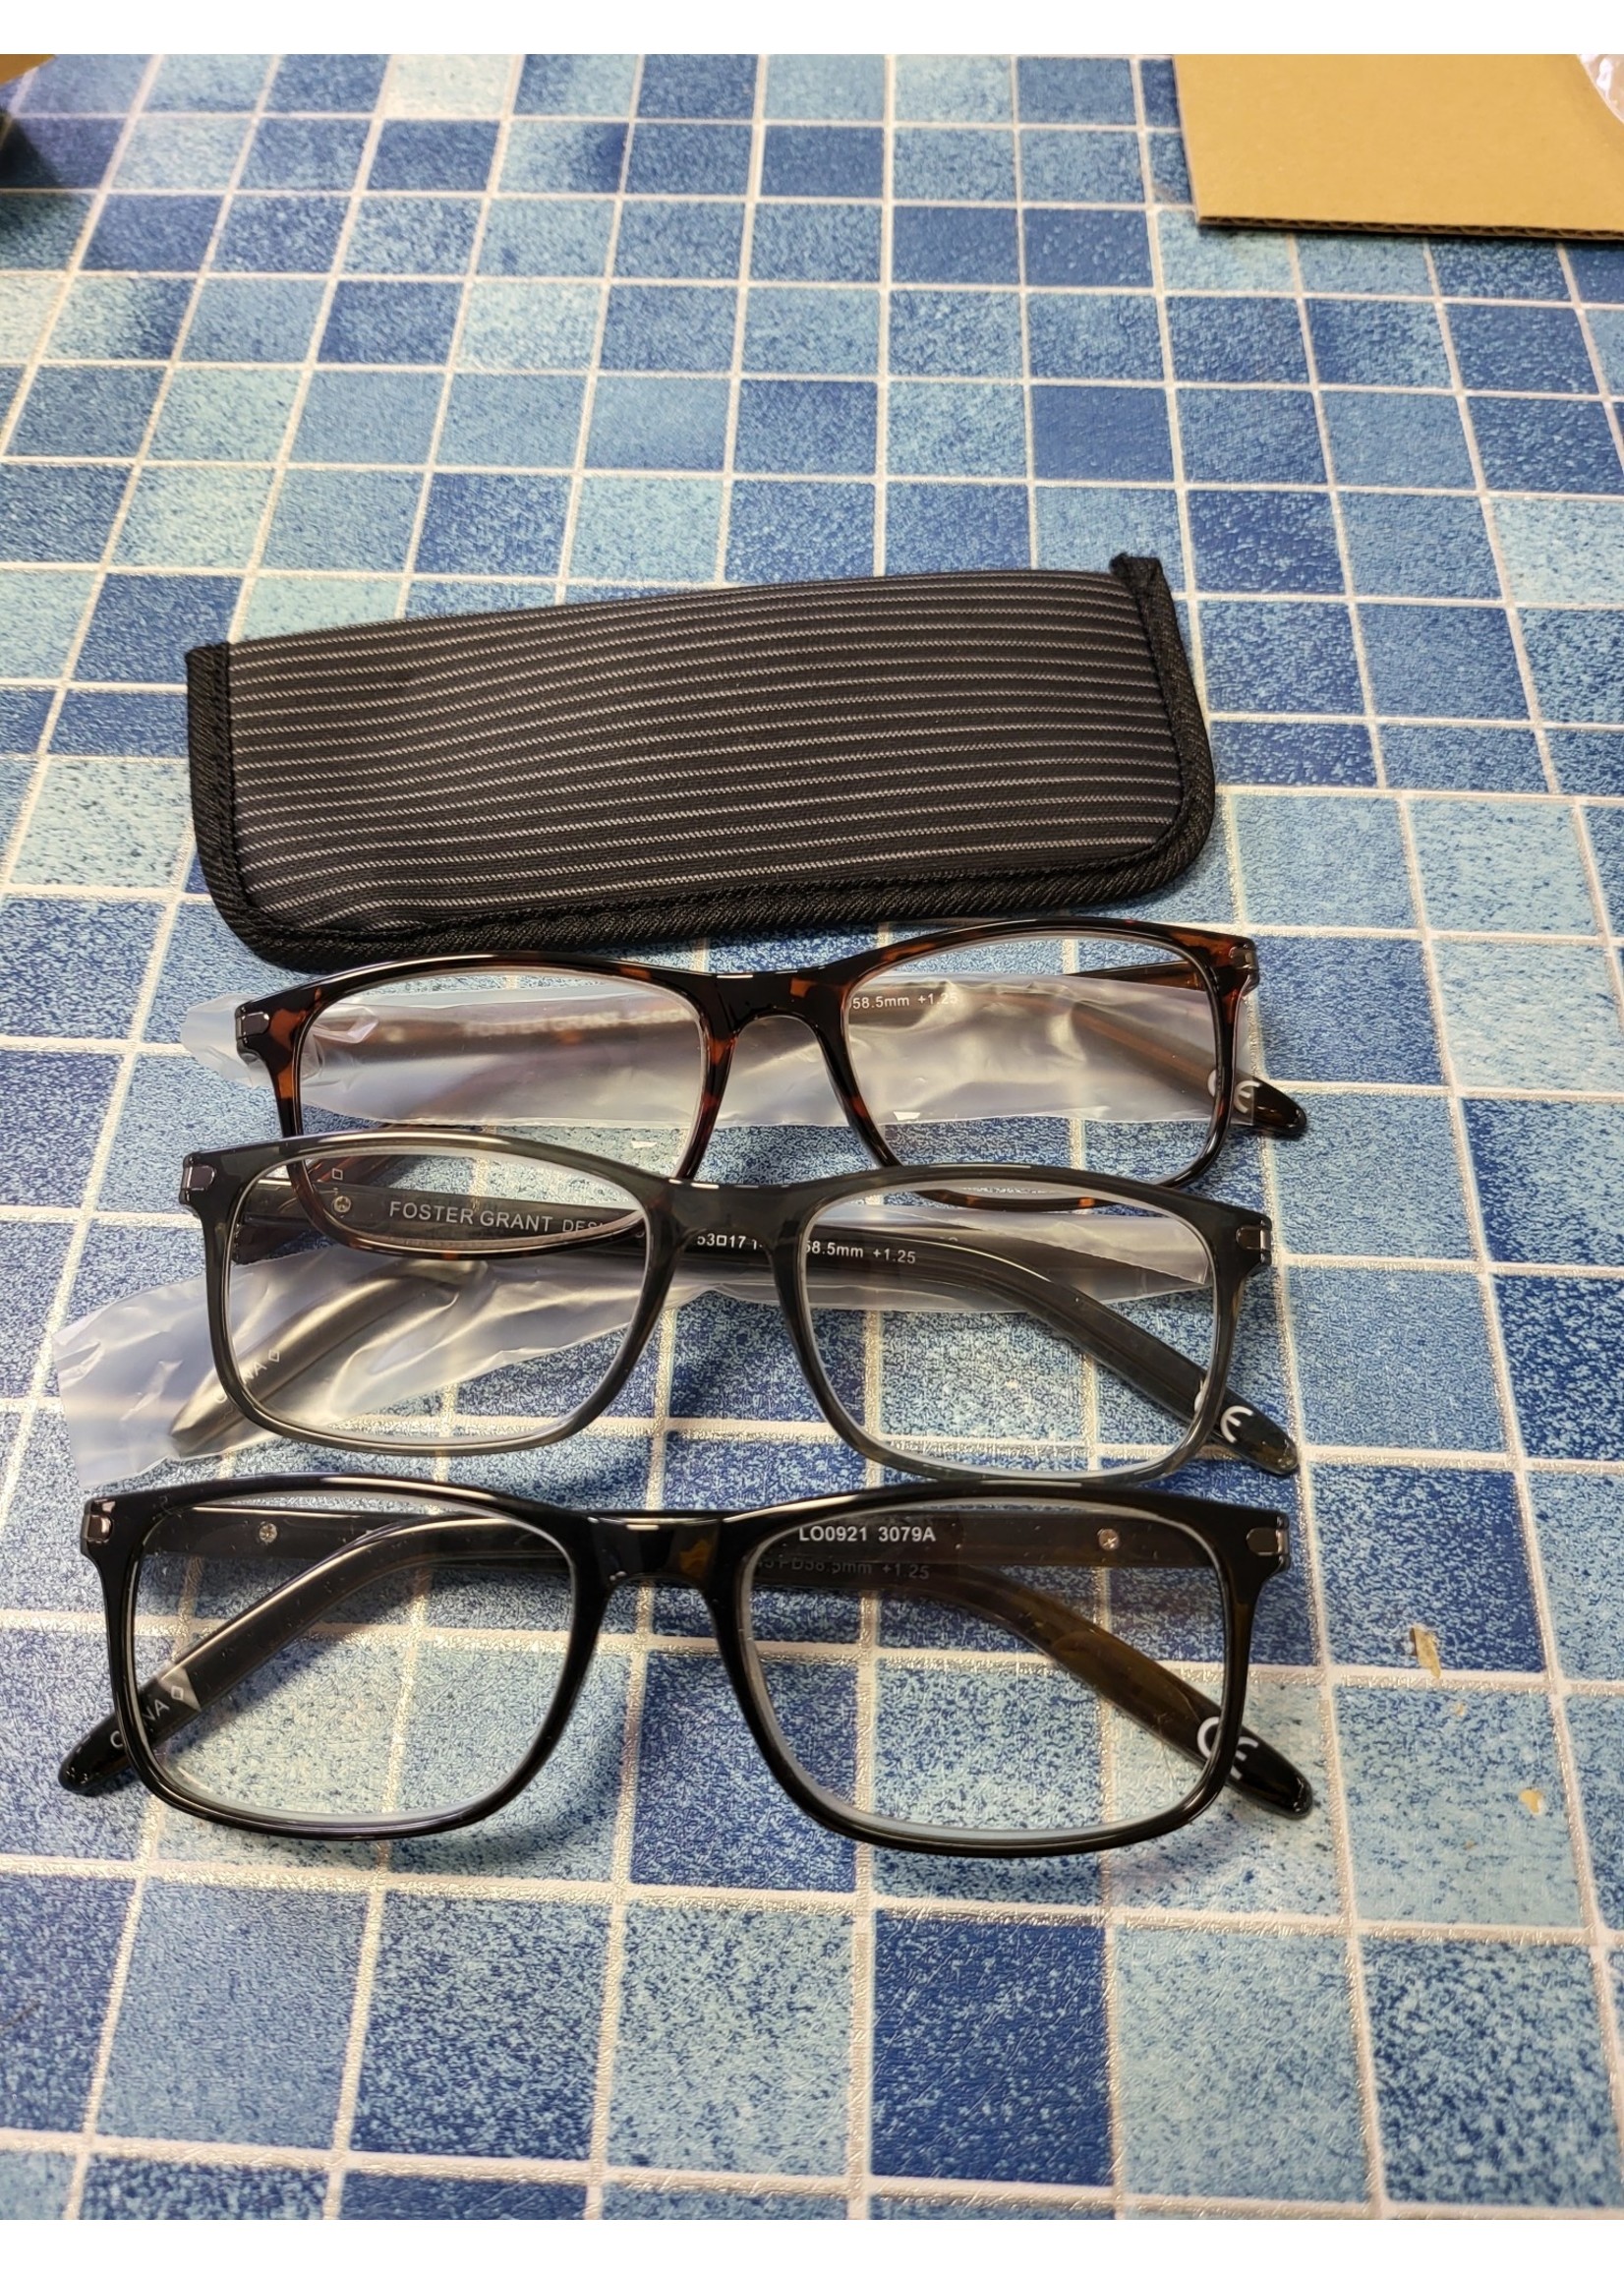 Design Optics Foster Grant Reading Glasses 3-Pack +1.25